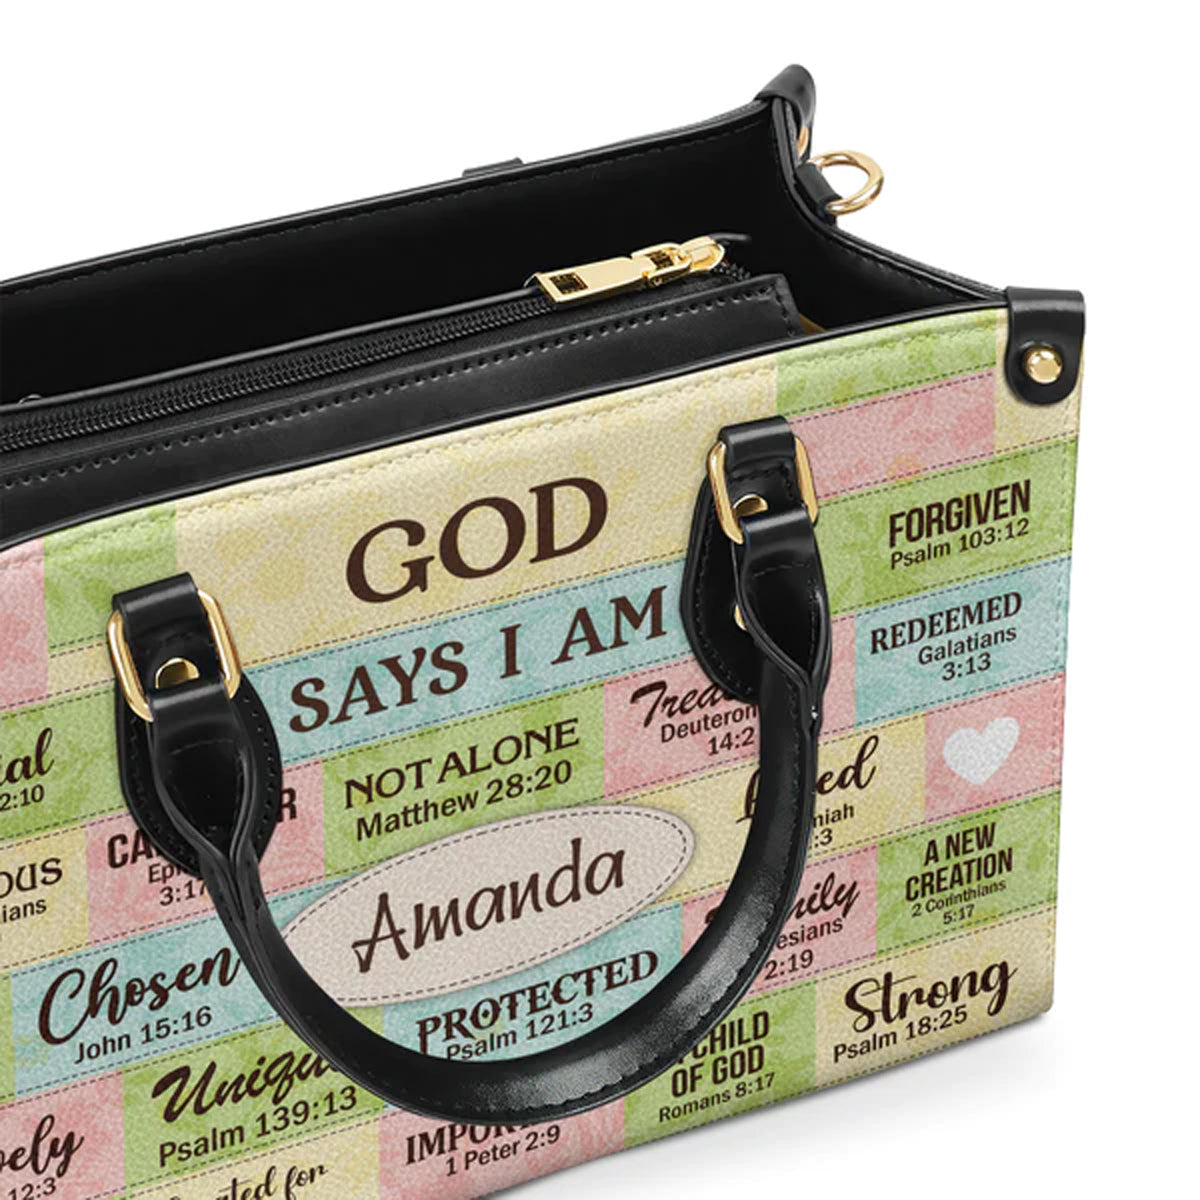 Christianartbag Handbags, God Says I Am Leather Bags, Personalized Bags, Gifts for Women, Christmas Gift, CABLTB02300723. - Christian Art Bag